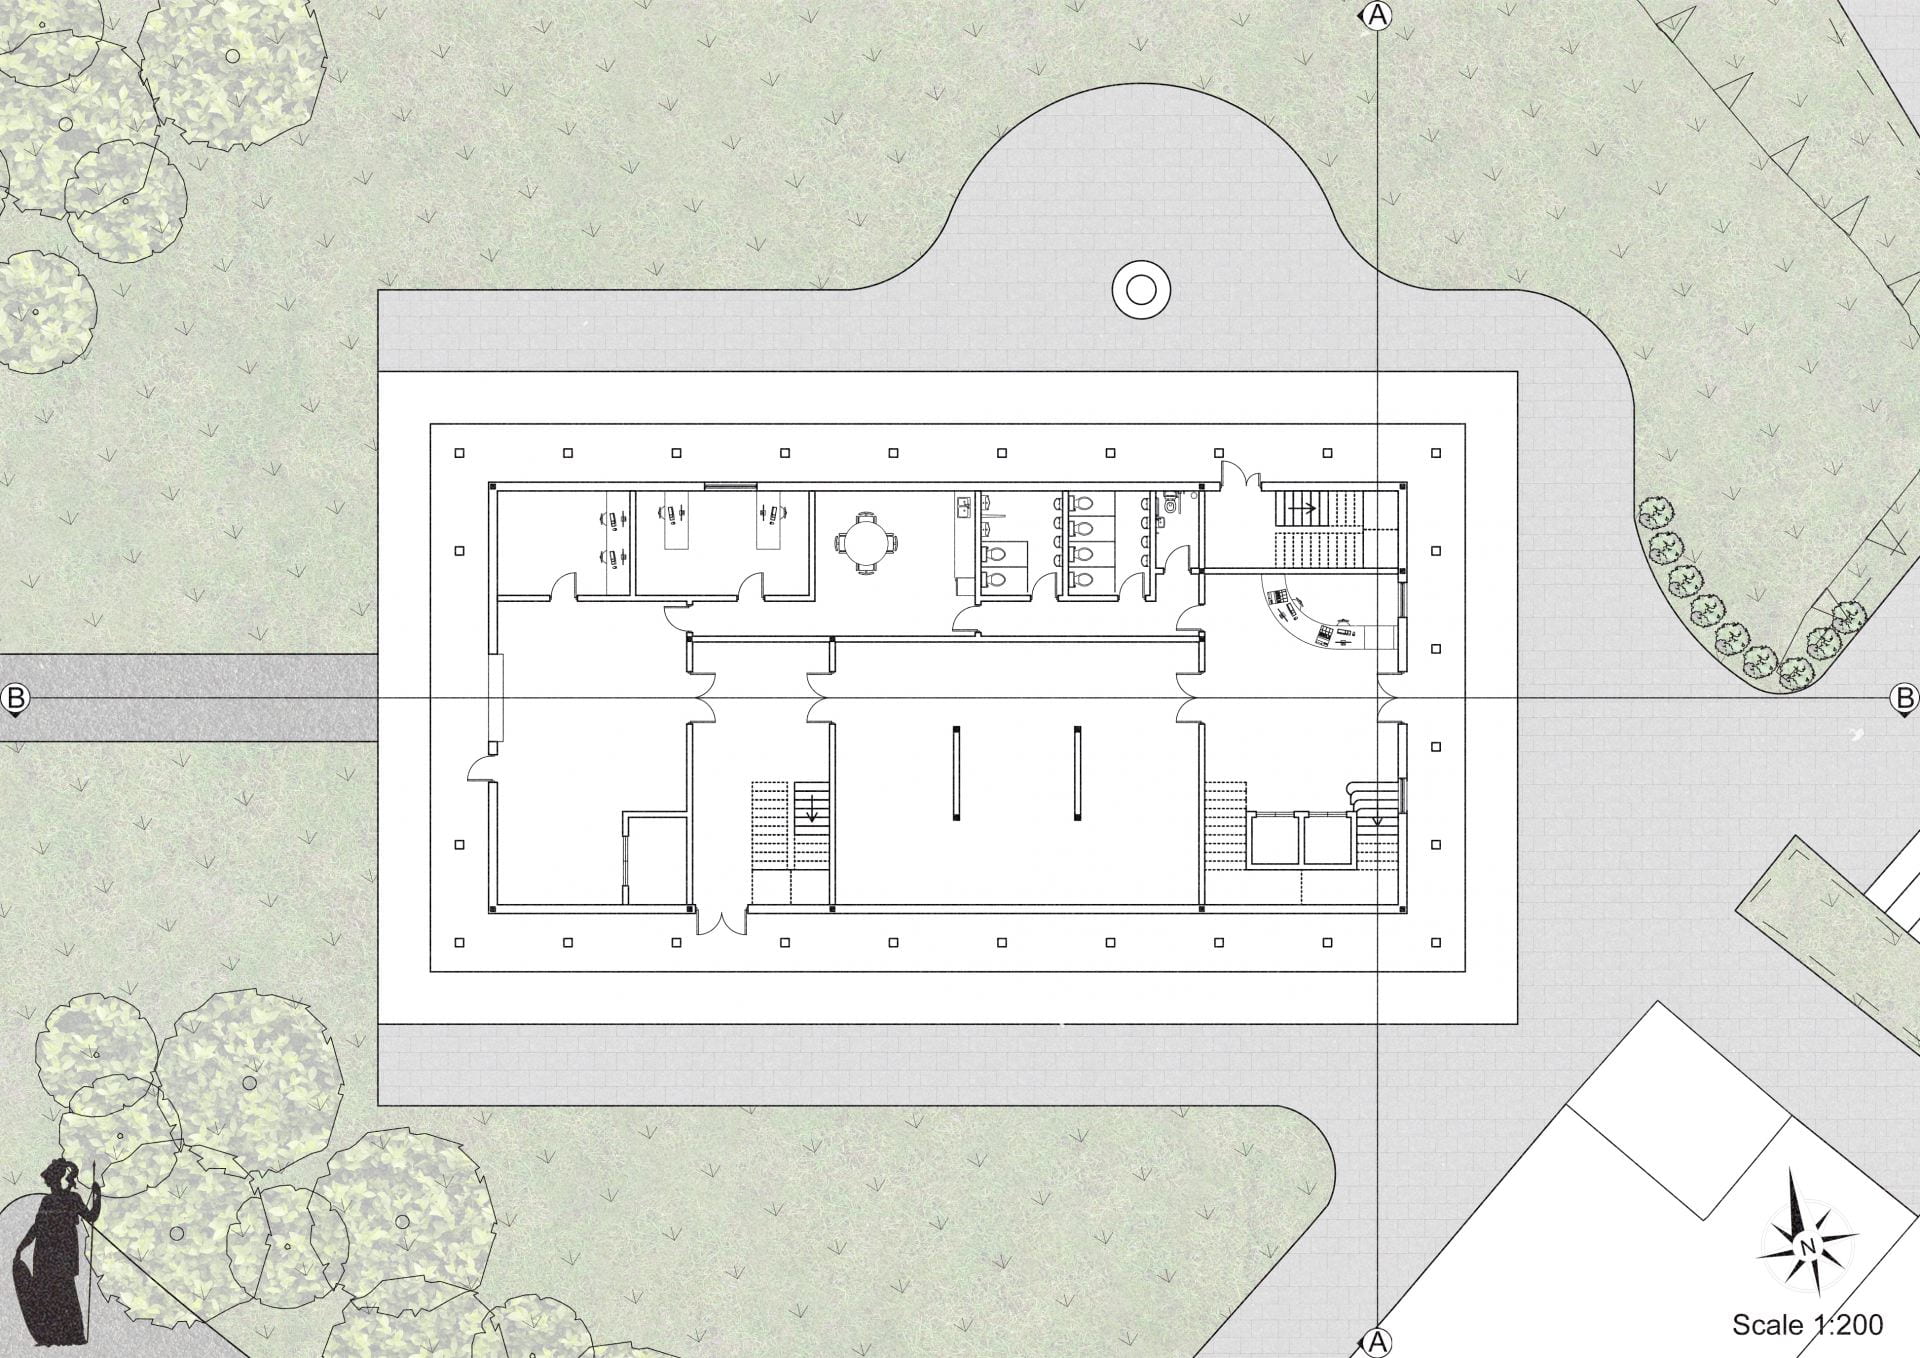 Ground Floor Plan of the Art Gallery